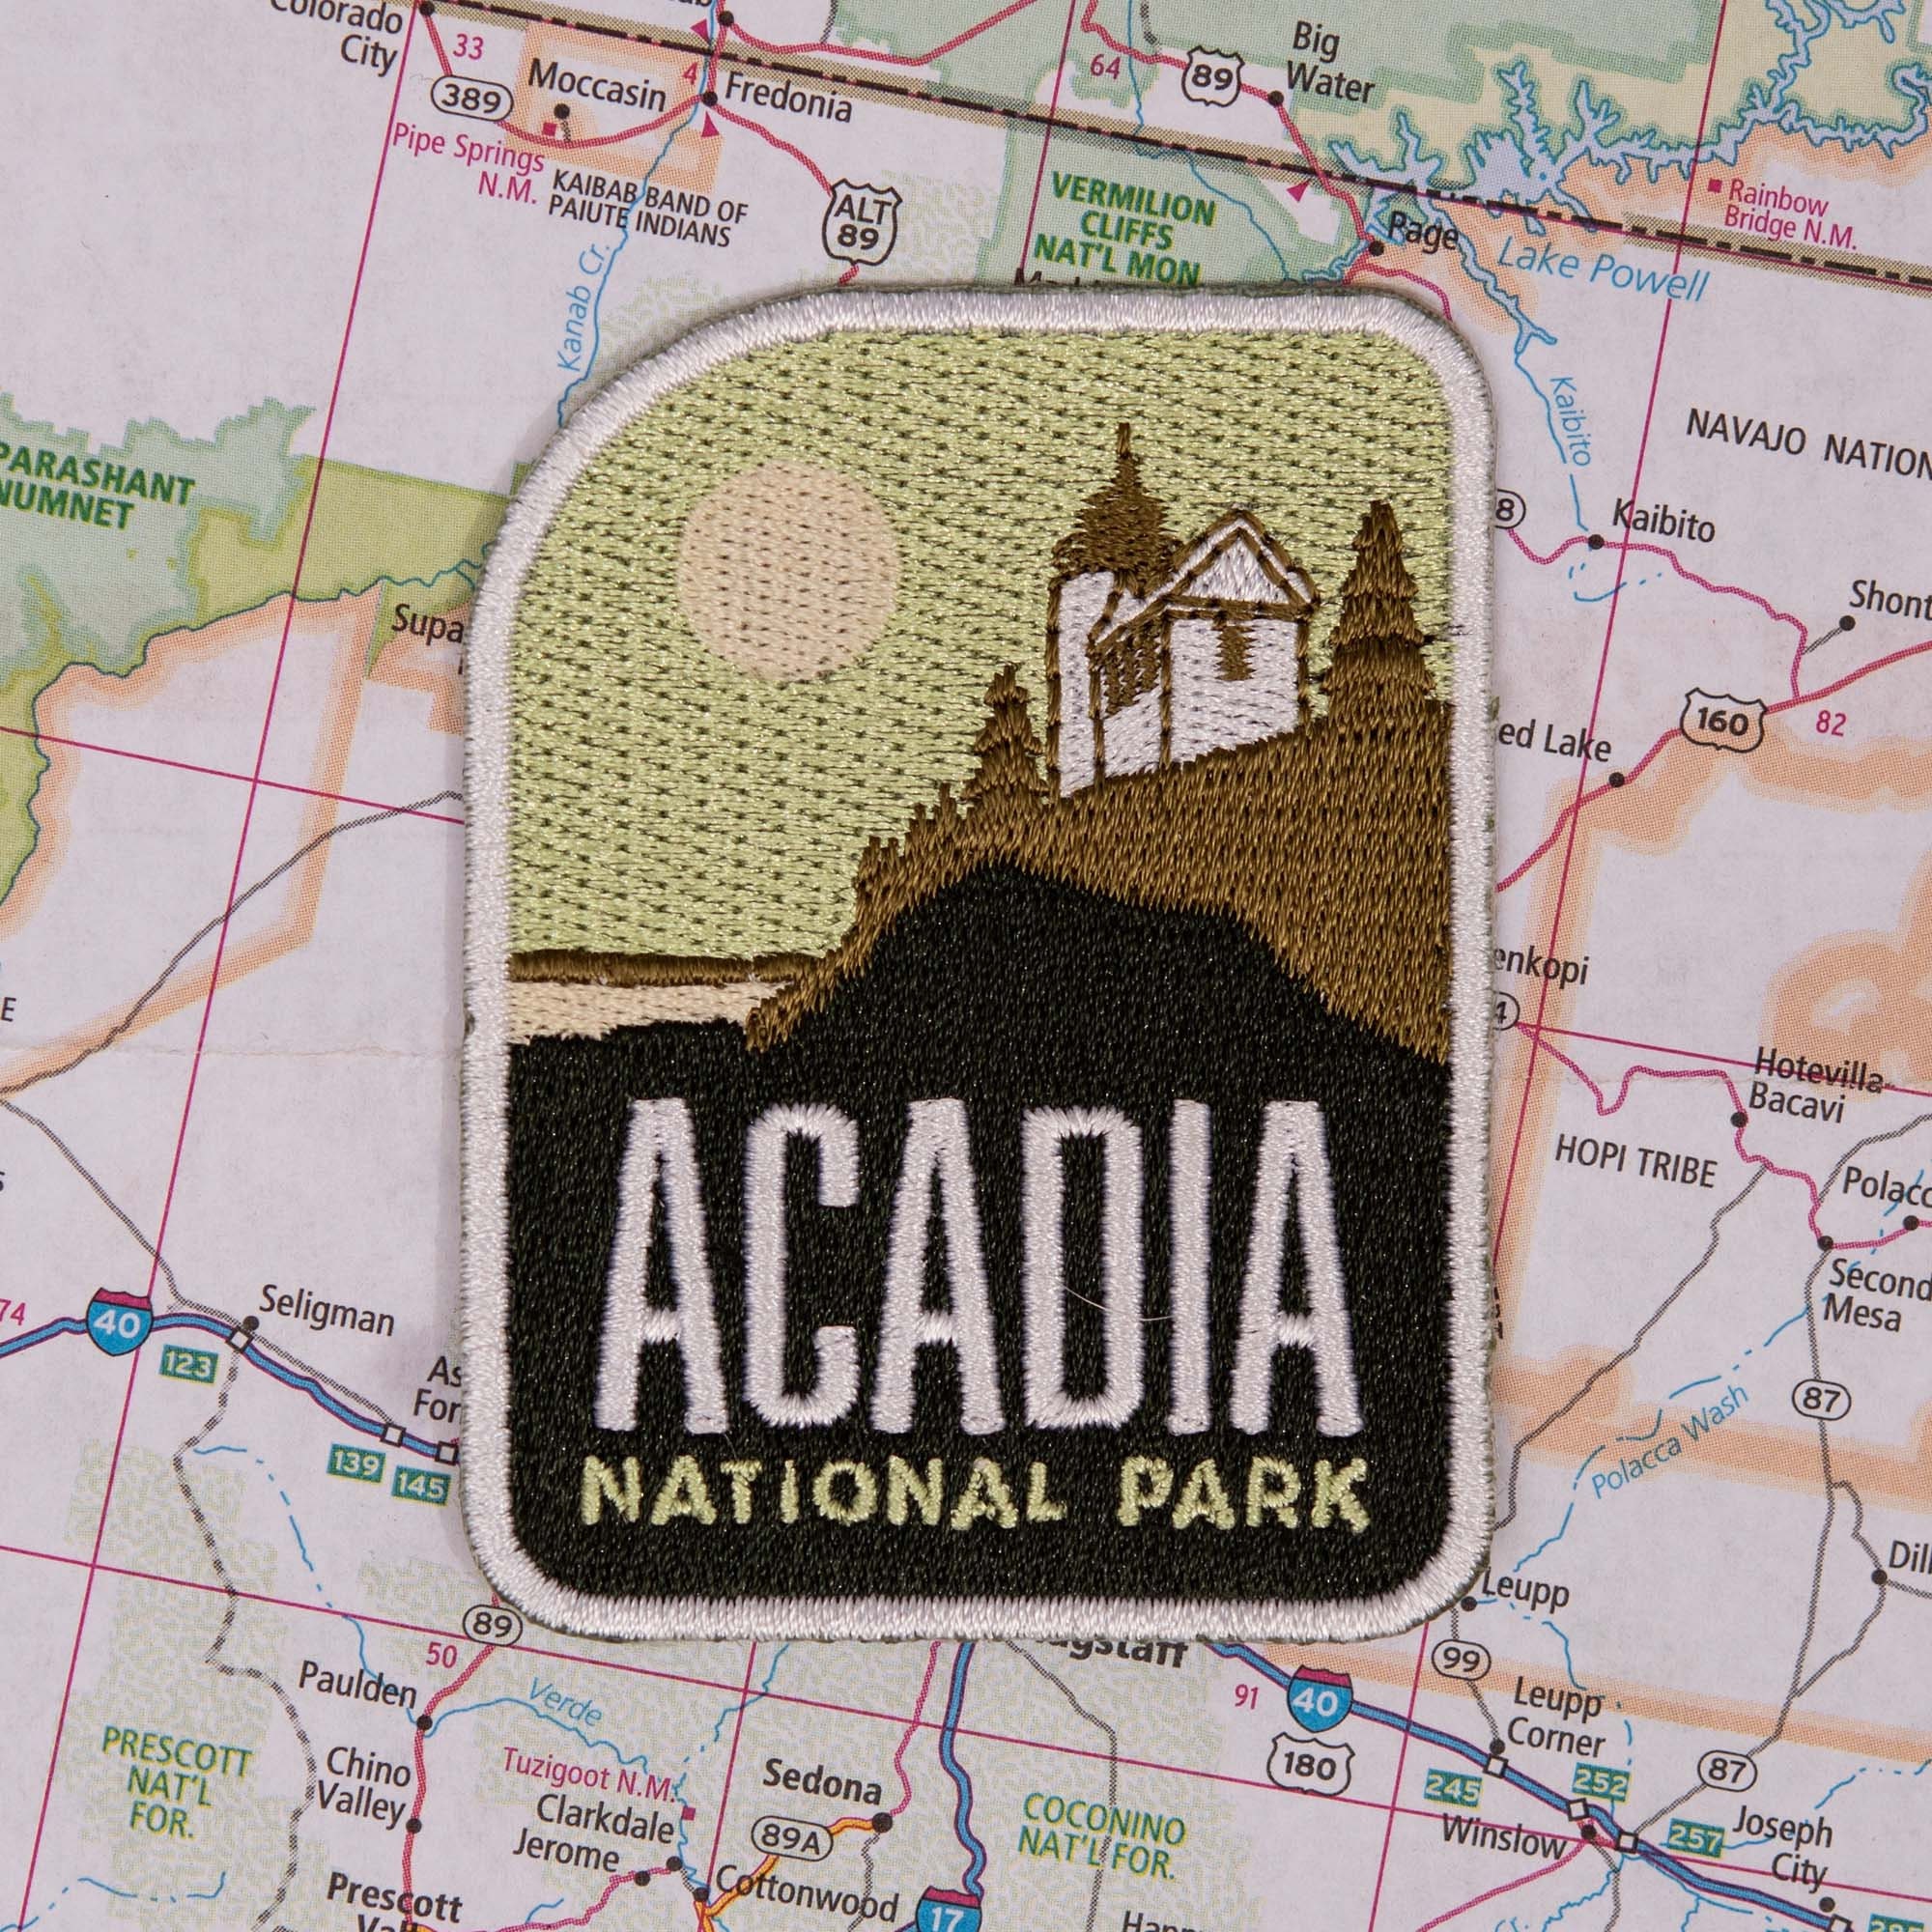 Acadia National Park iron-on patch (Carriage Road, Jordan Pond Bridge, –  FATBIRD